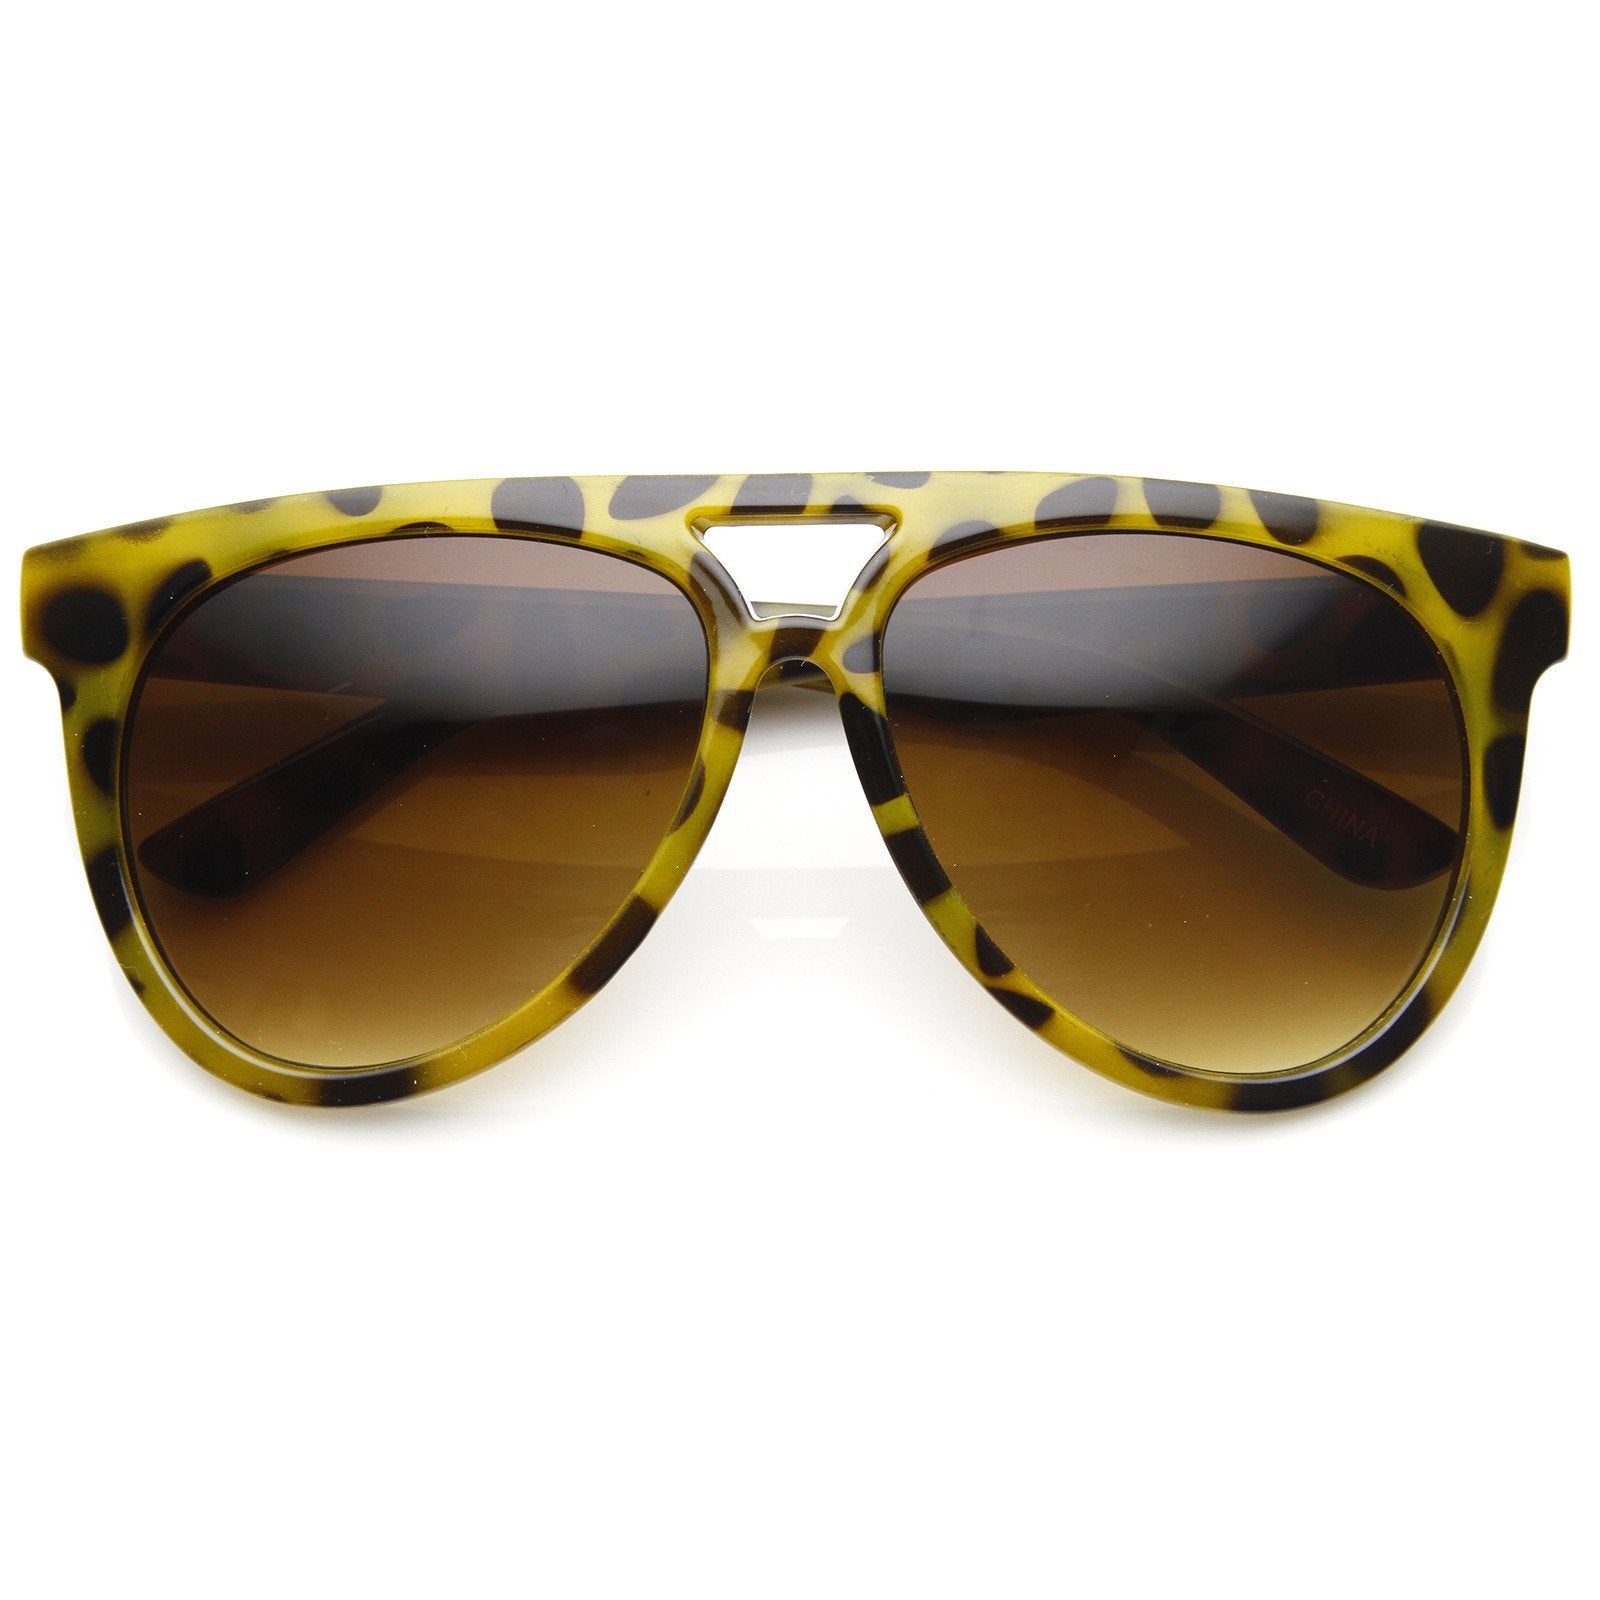 Women's Indie Oversize Diamond Shape Sunglasses - zeroUV